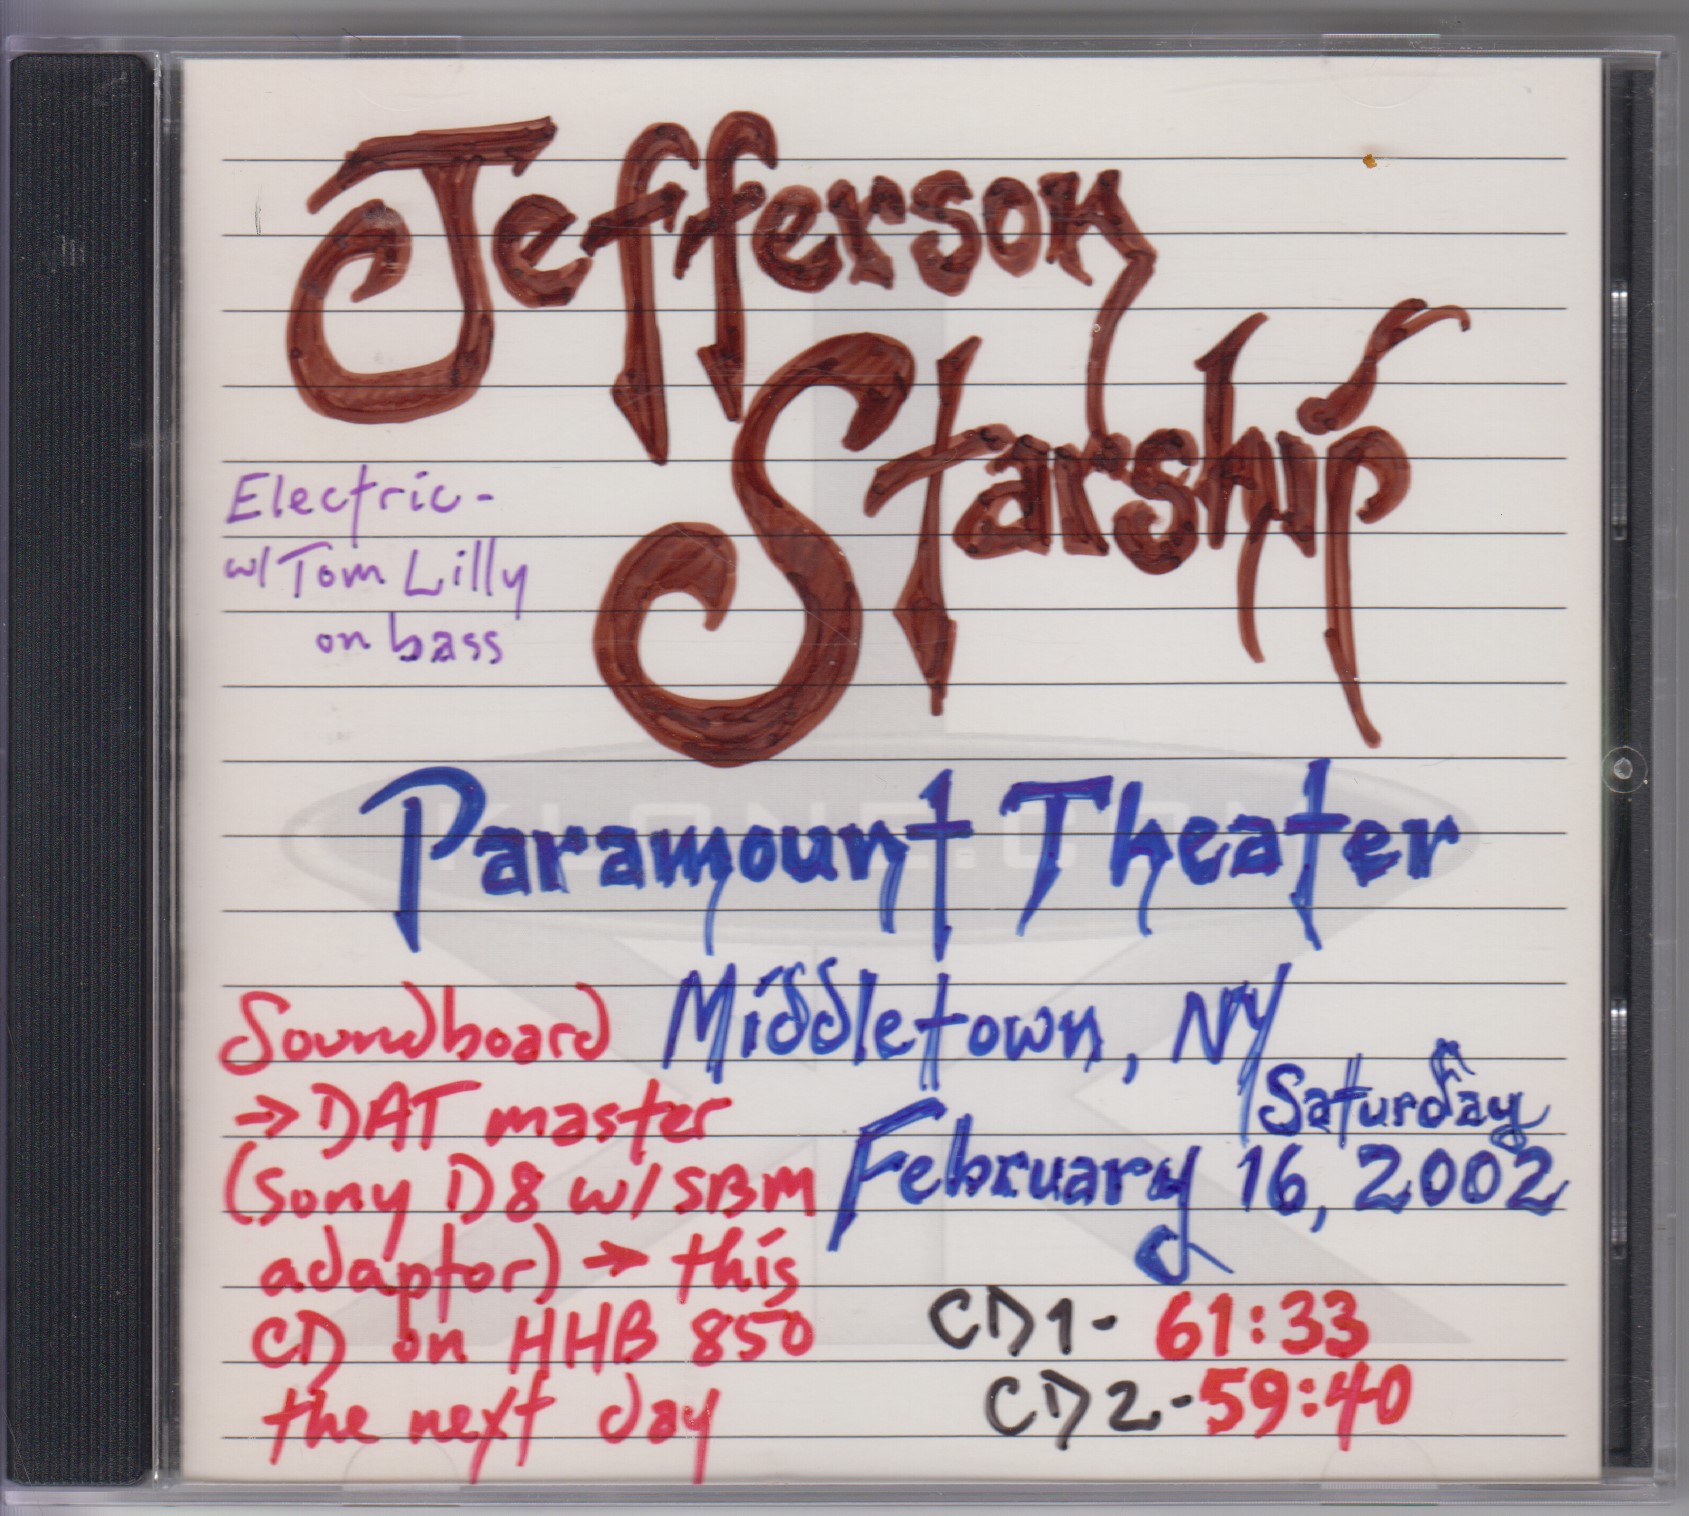 JeffersonStarship2002-02-16ParamountTheatreMiddletownPA (2).jpg